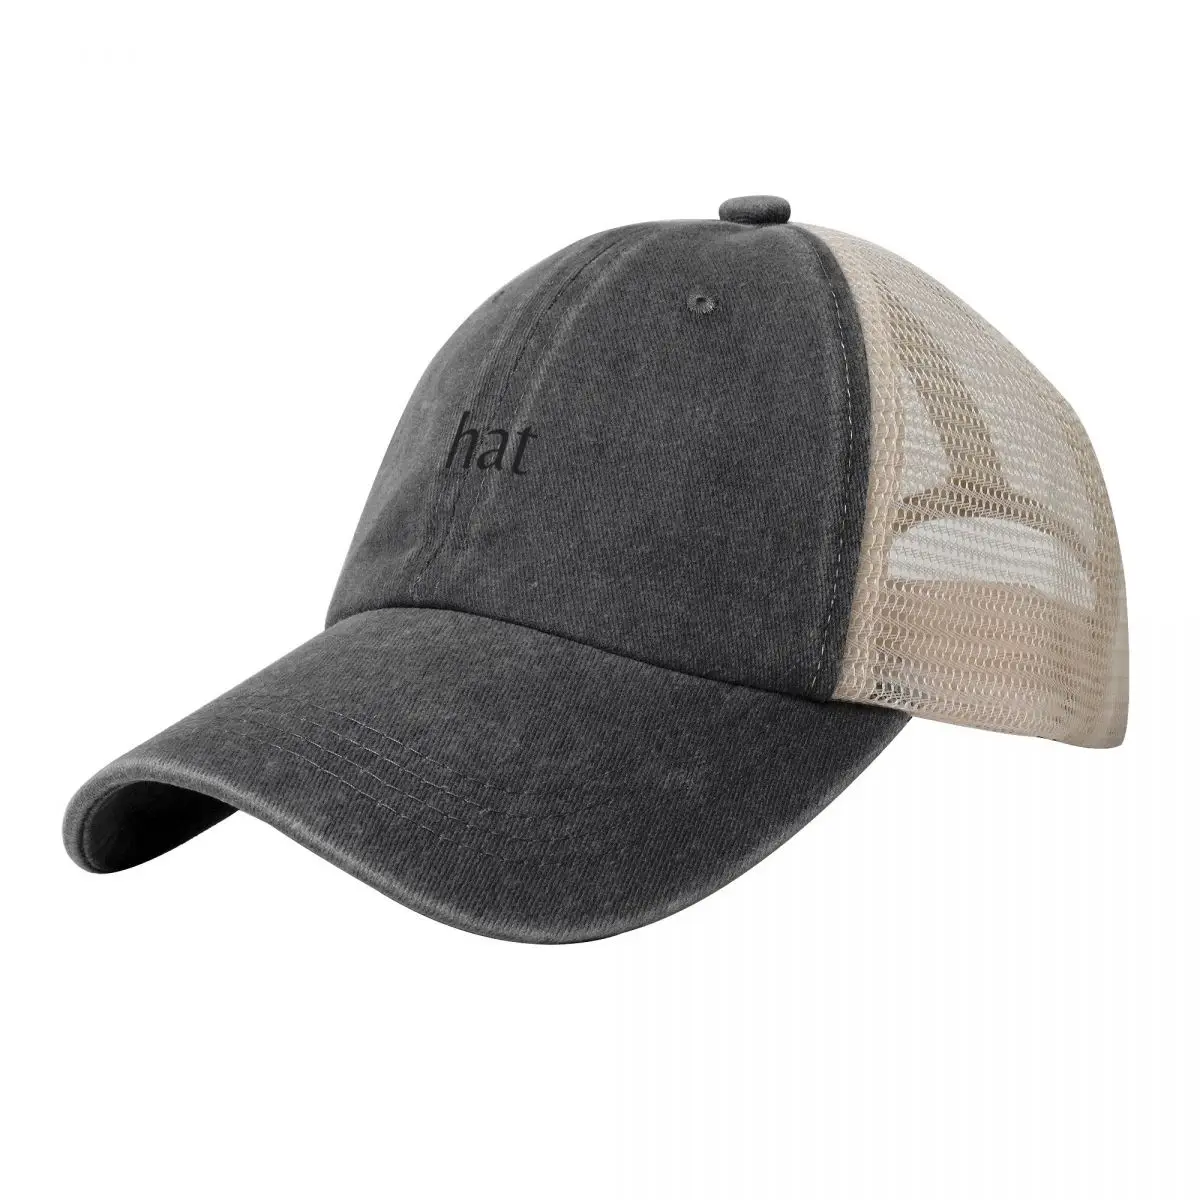 

Hat that says Hat on it Cowboy Mesh Baseball Cap Hat Beach Sports Cap hiking Golf Man Trucker Hats For Men Women's